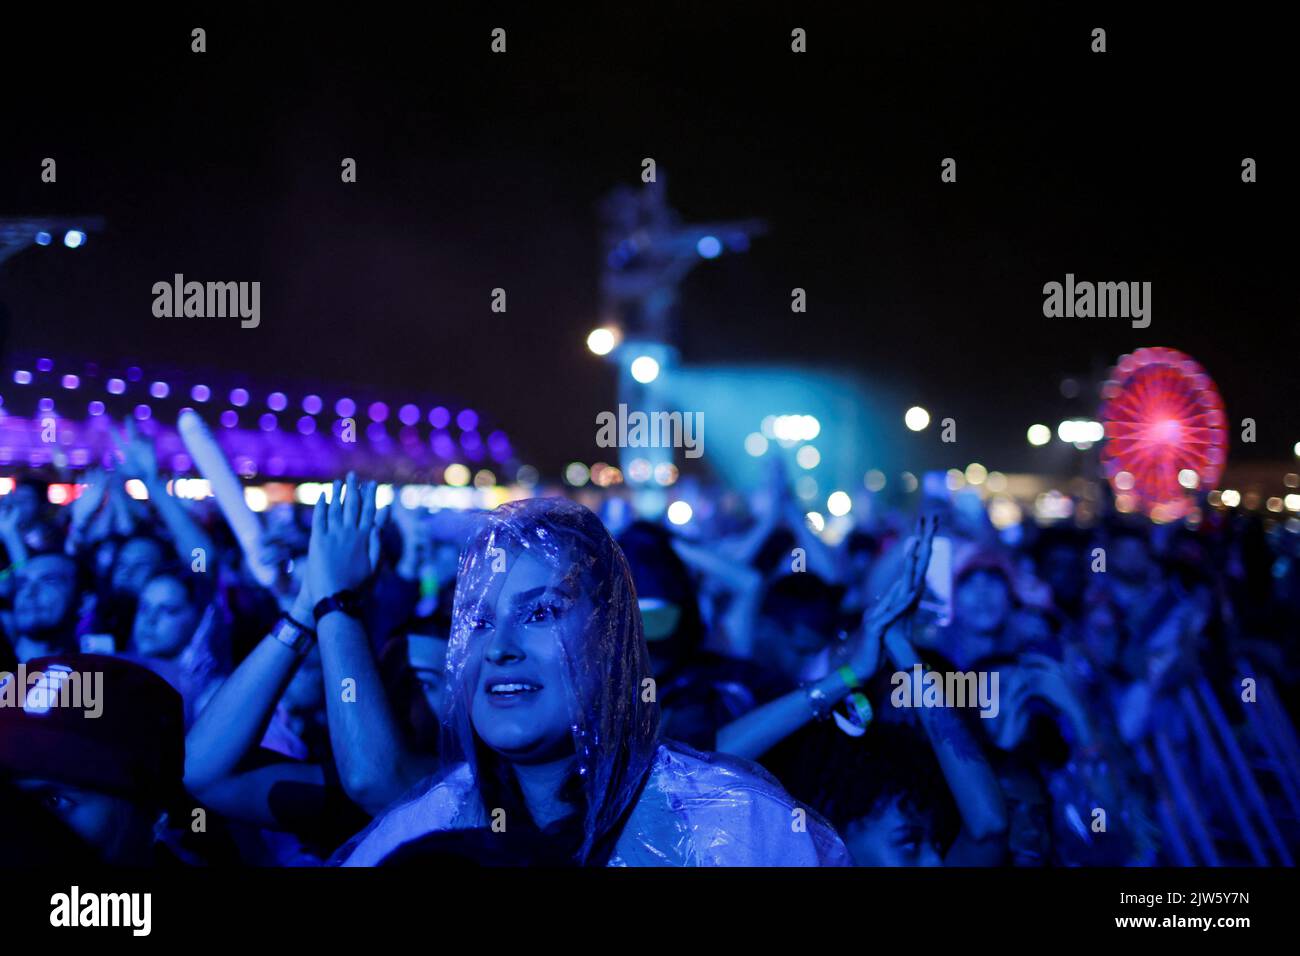 Fans attend the Rock in Rio music festival in Rio de Janeiro, Brazil September 3, 2022. REUTERS/Pilar Olivares Stock Photo